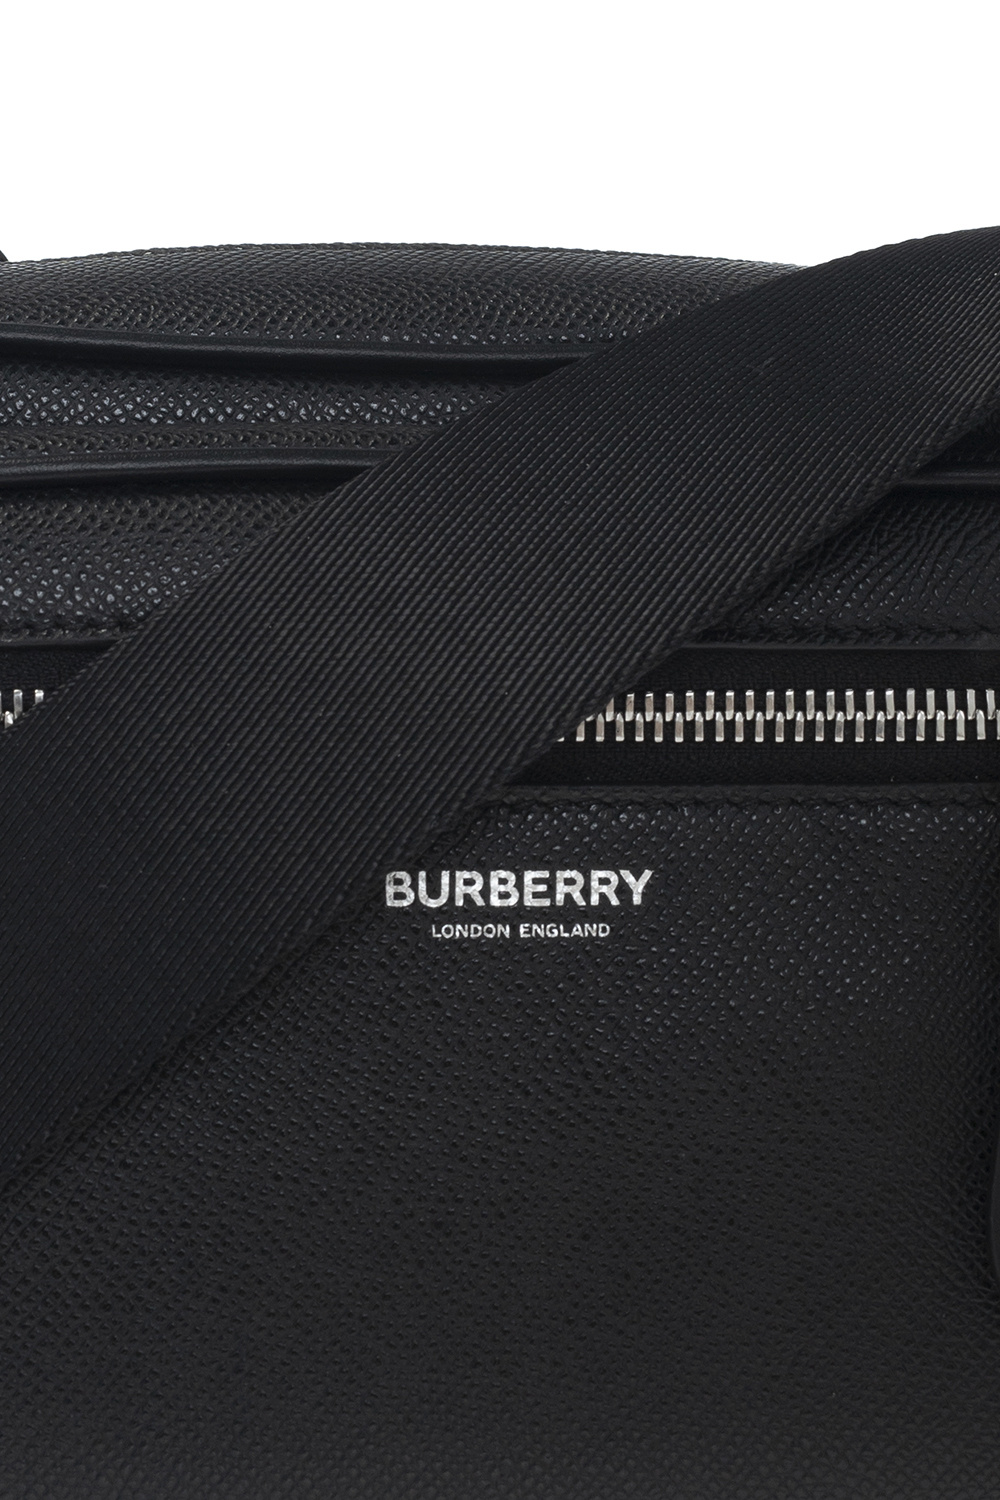 burberry scarf ‘Paddy’ shoulder bag